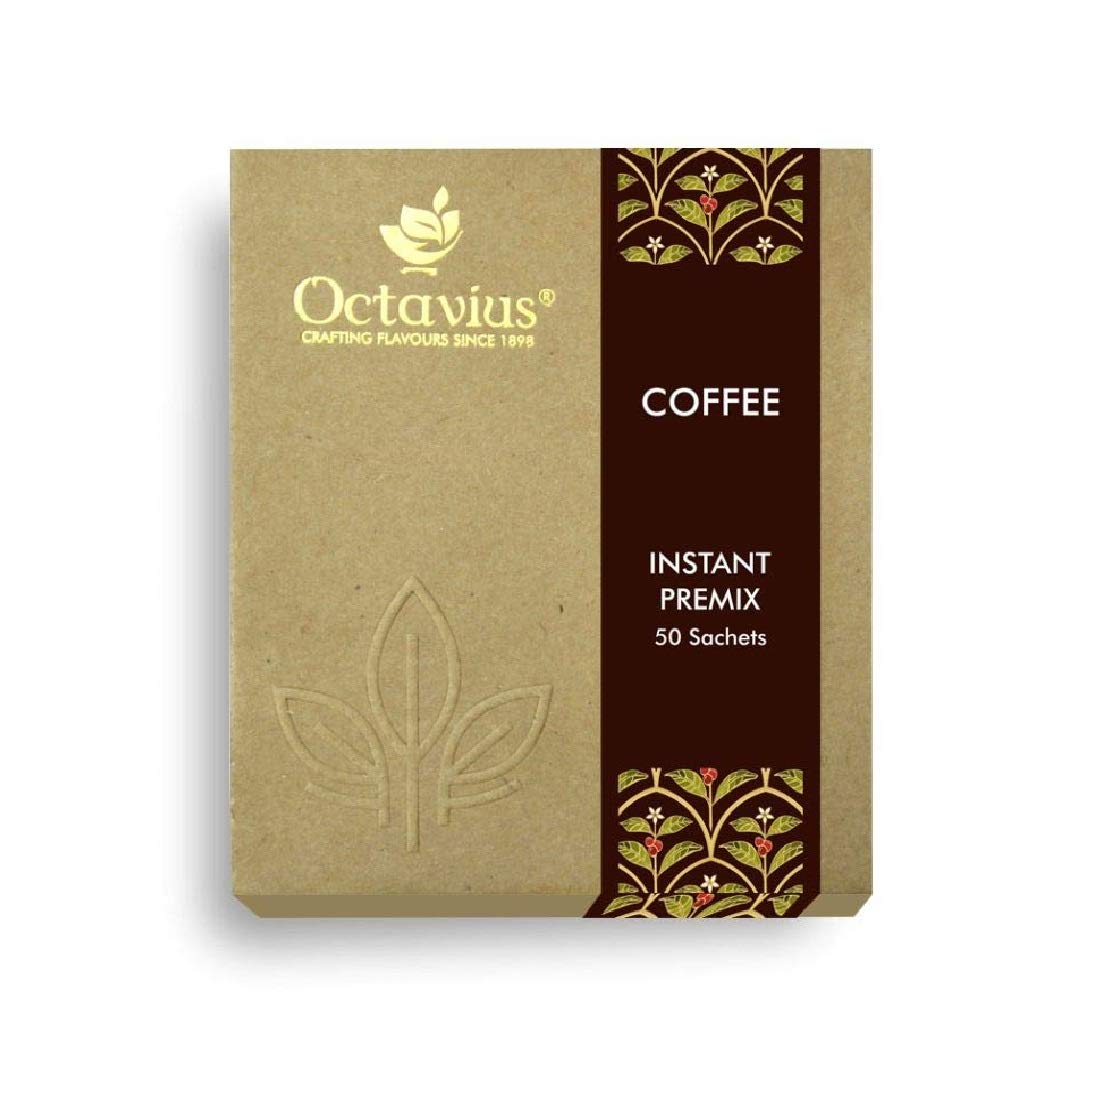 Octavis Coffee Image